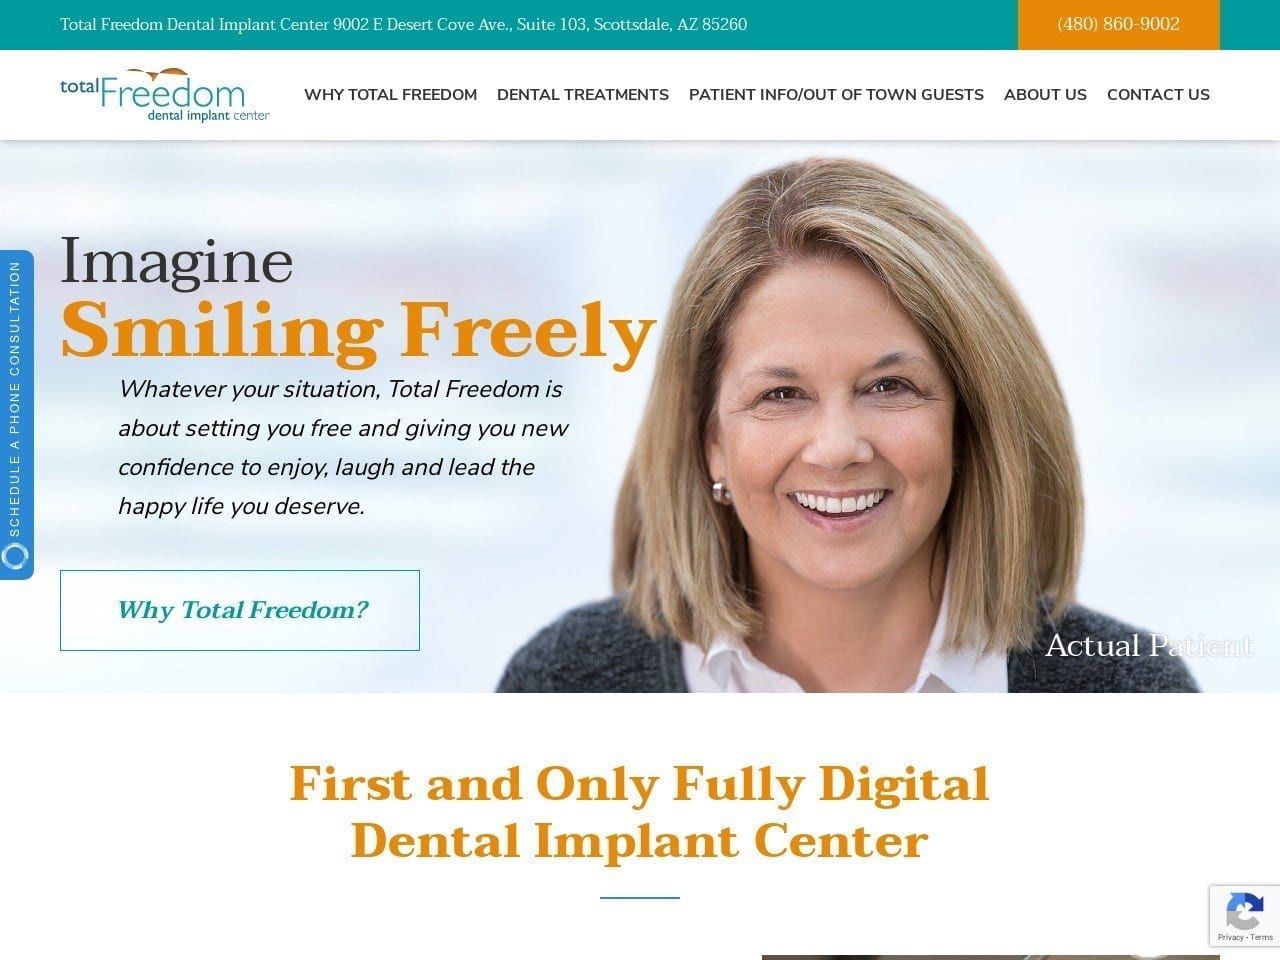 Total Freedom Dental Implant Center Website Screenshot from totalfreedomdentalimplants.com